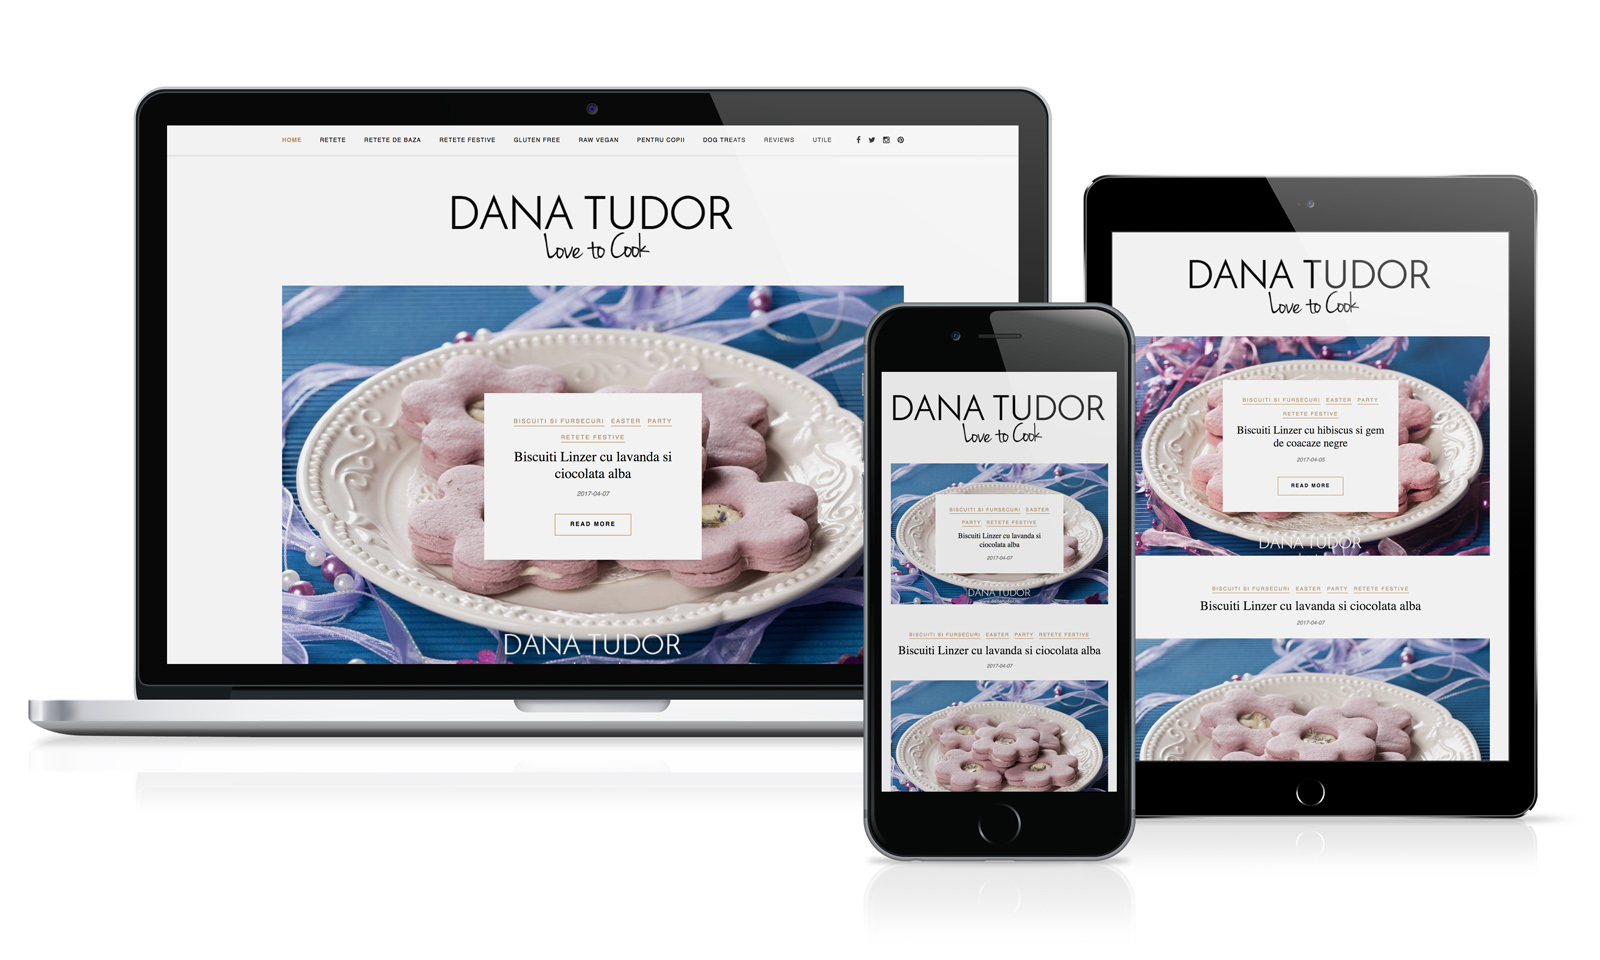 Dana Tudor Love to Cook - web site